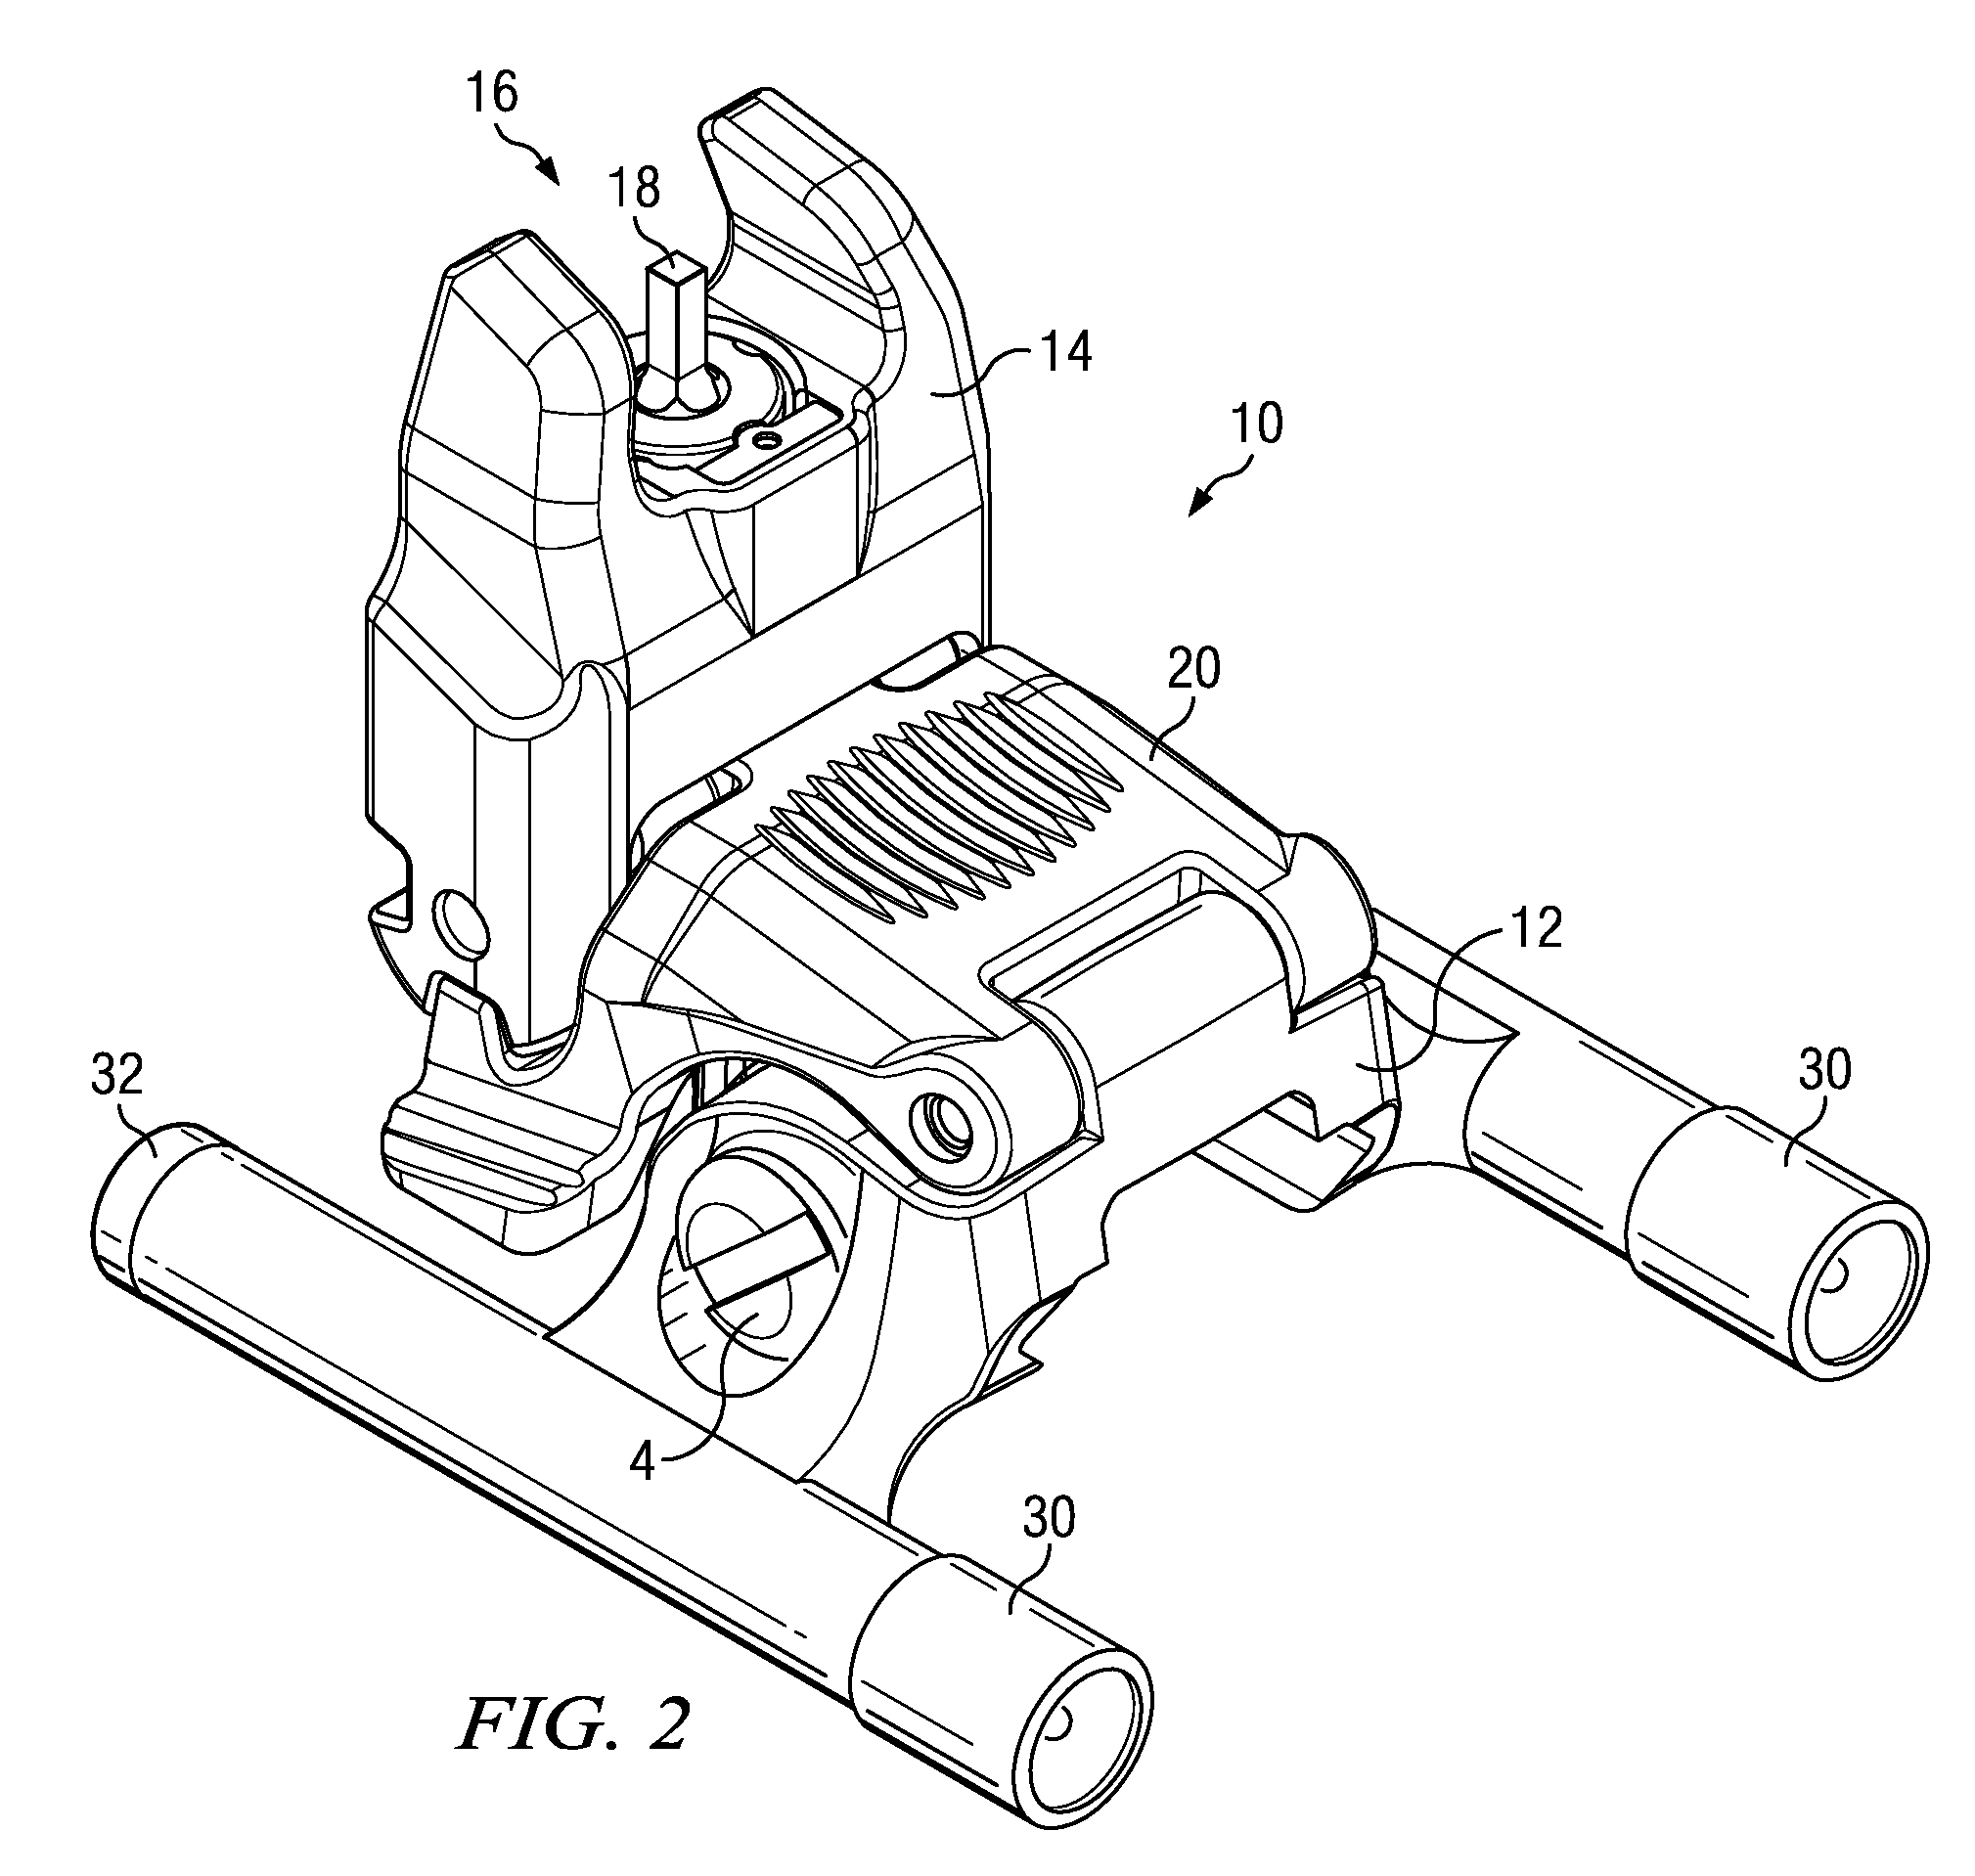 Forward mounted gun sight with illumination apparatus